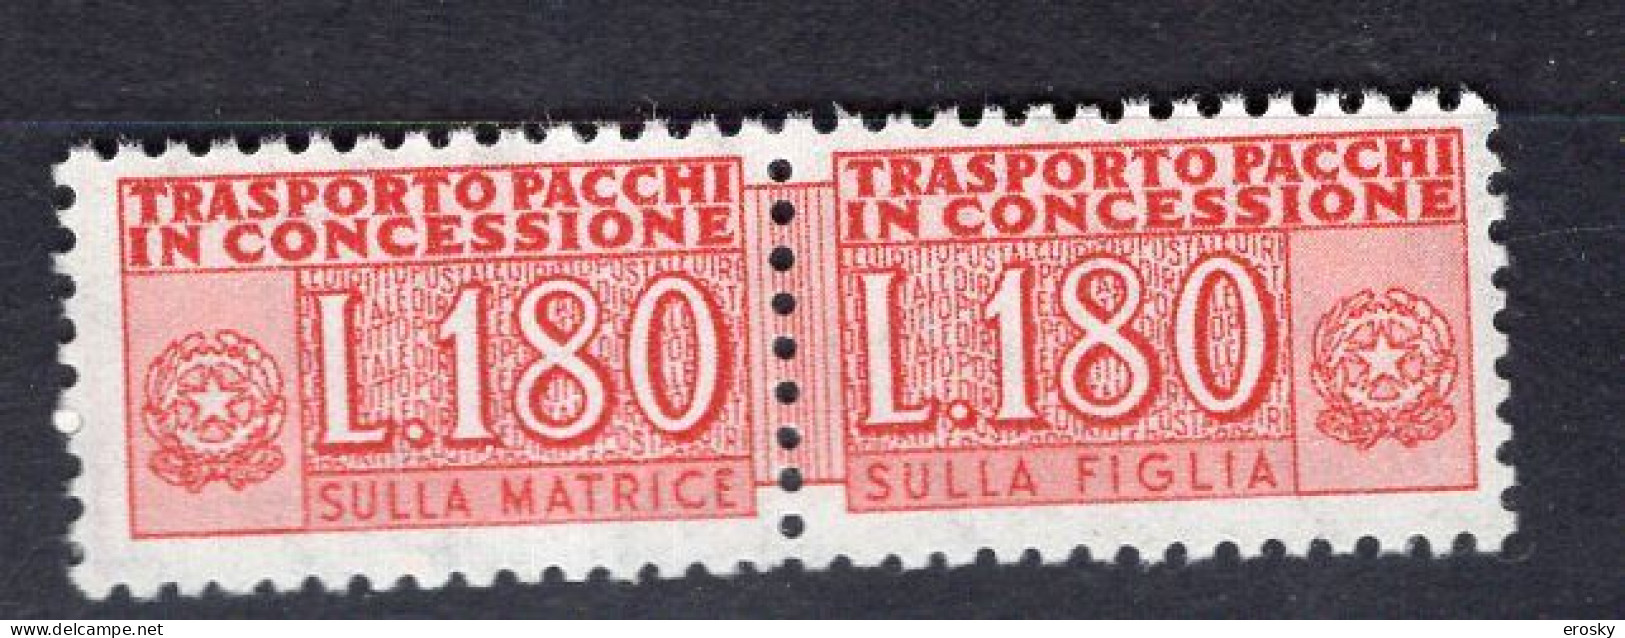 Y6273 - ITALIA PACCHI CONCESSIONE Ss N°17 - ITALIE COLIS Yv N°102 ** - Pacchi In Concessione